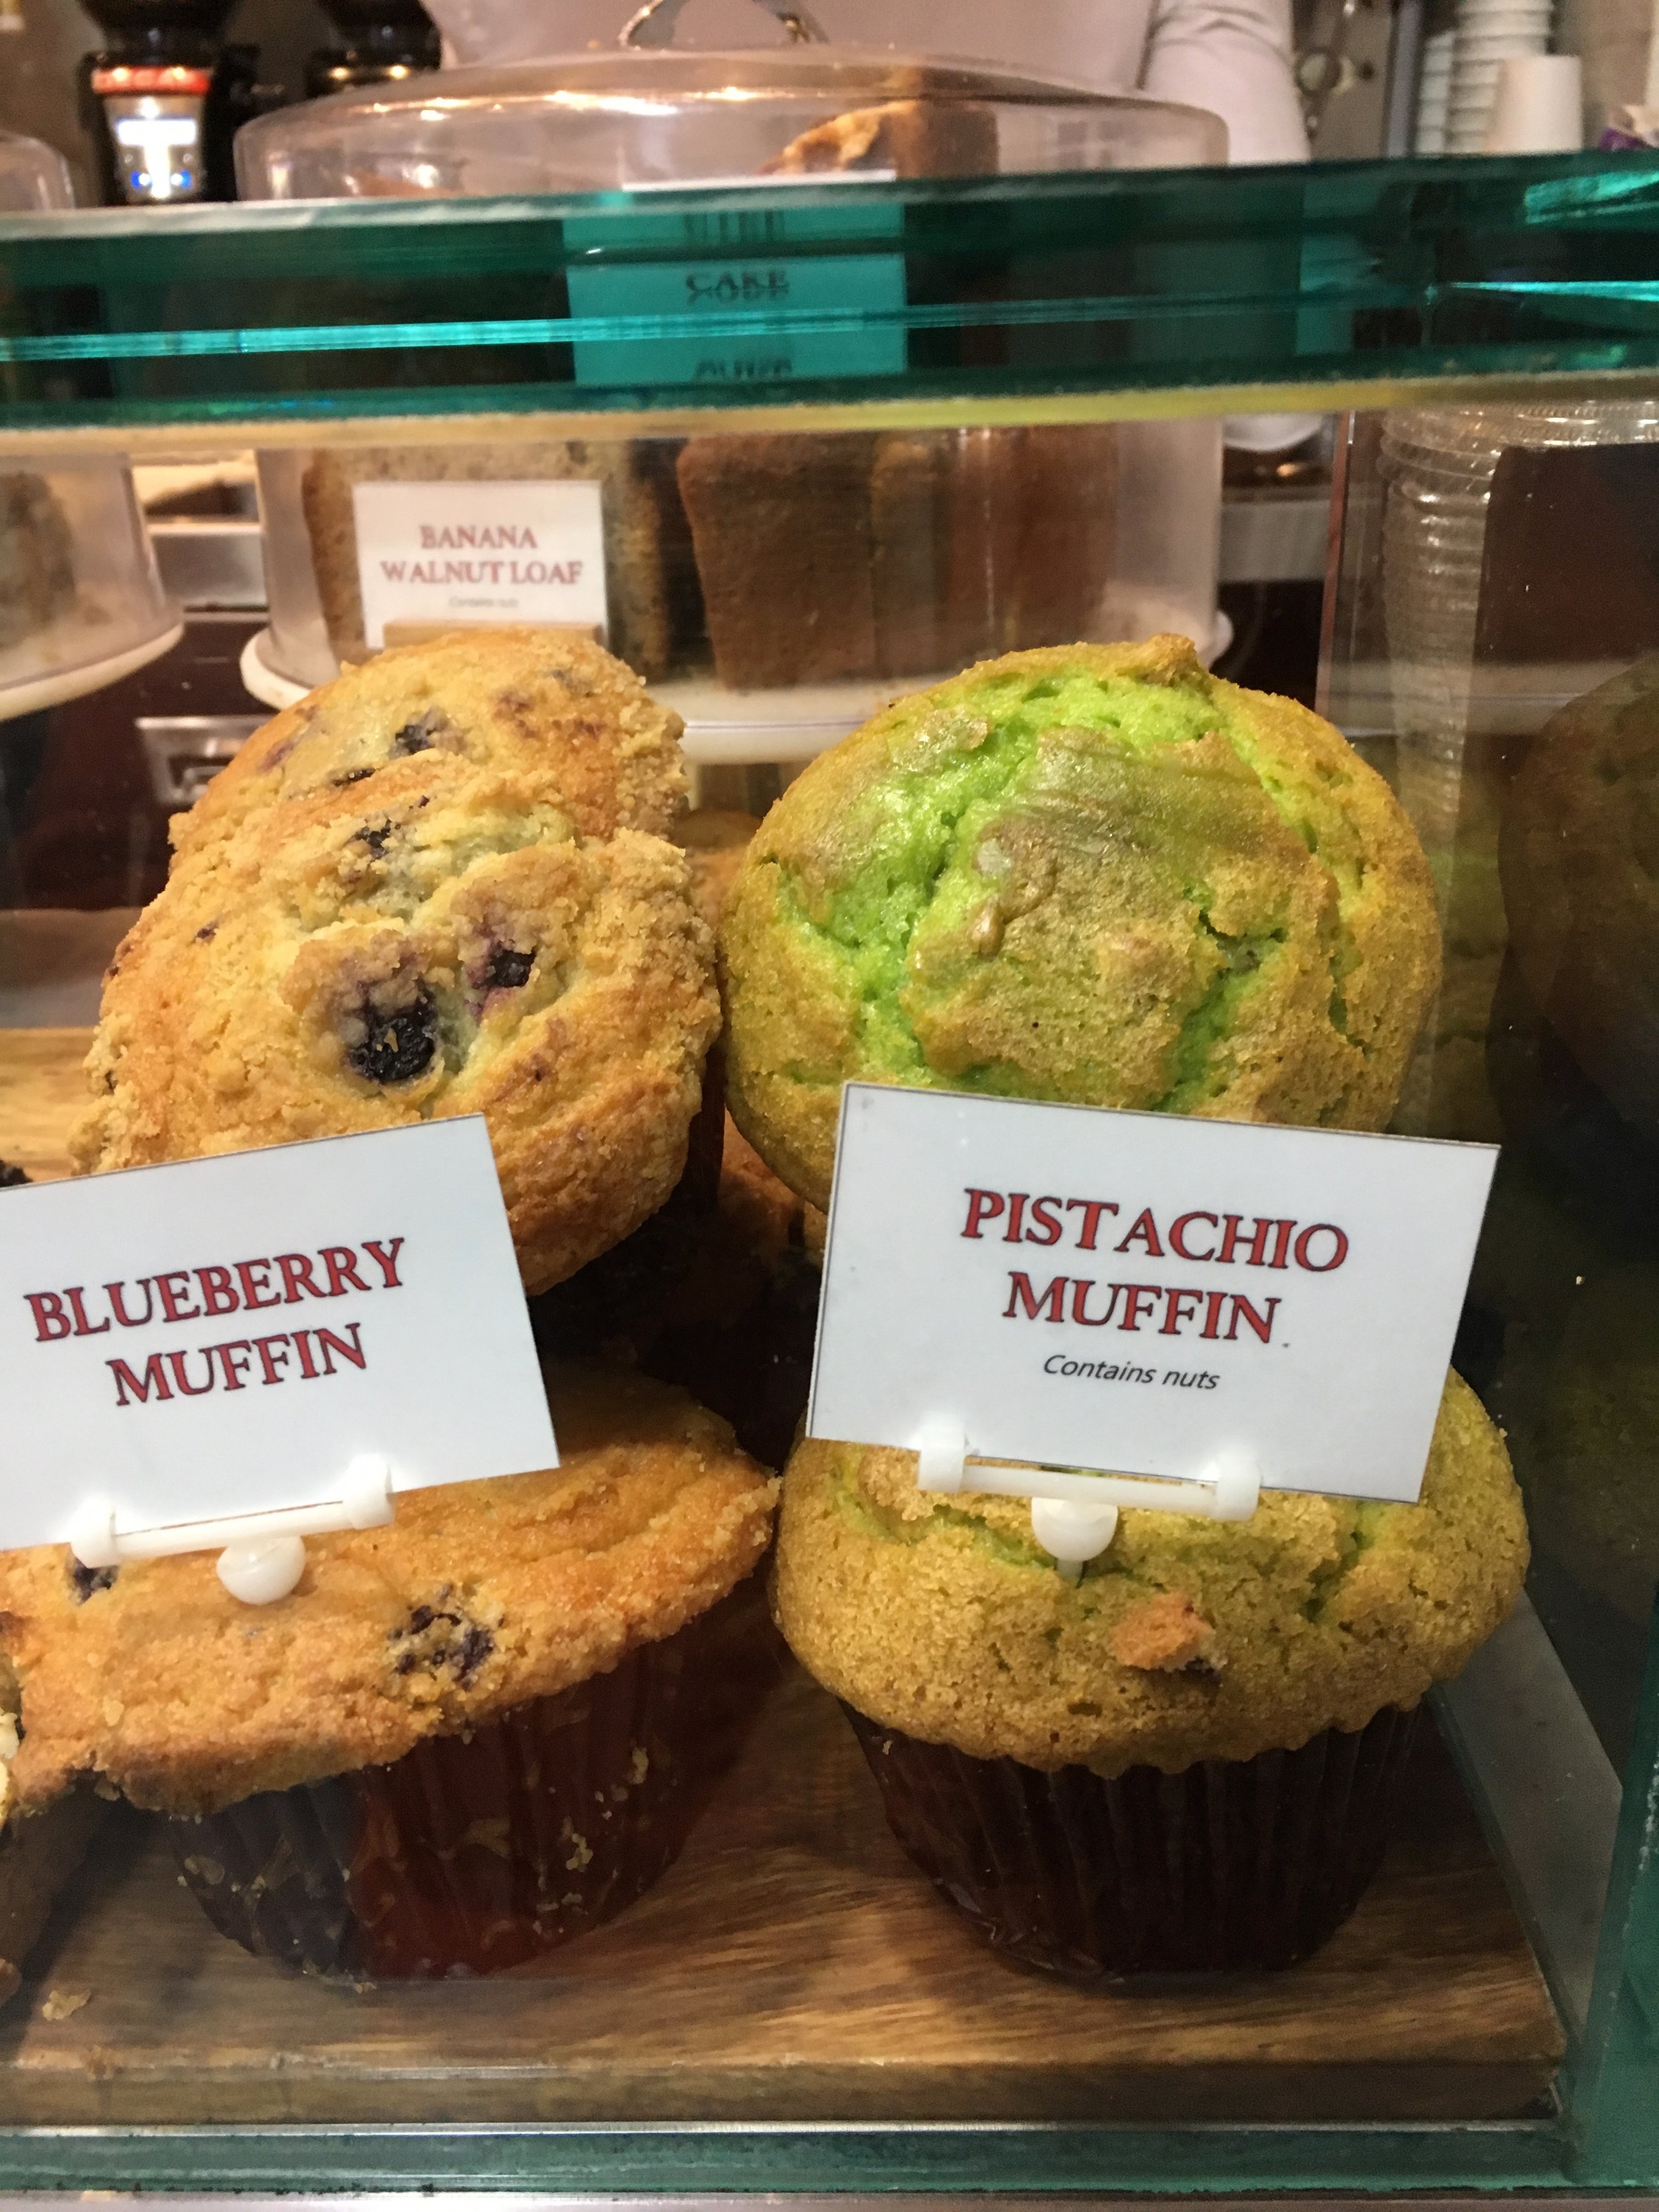 And a lurid pistachio muffin